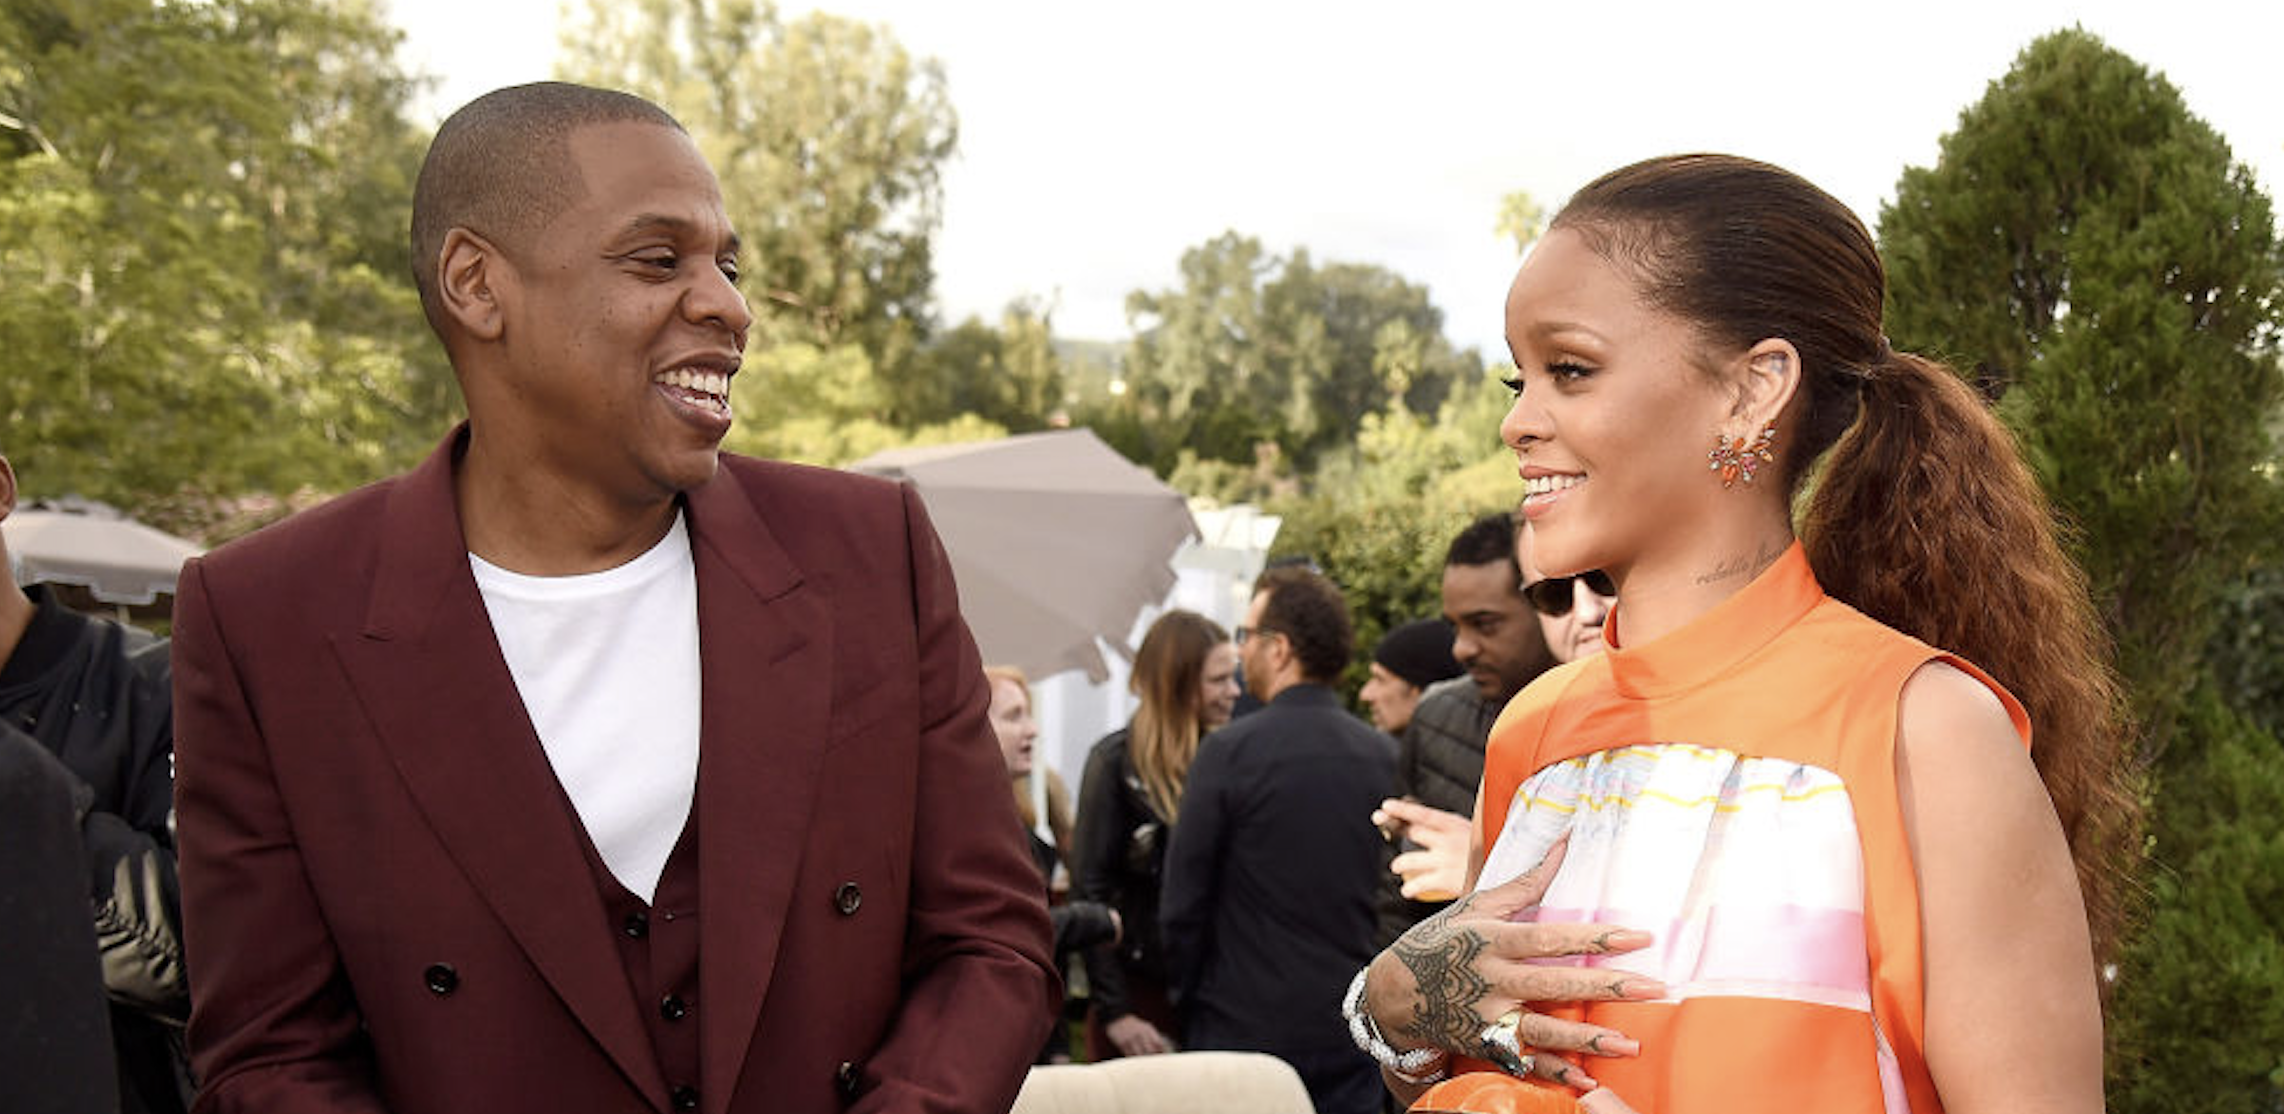 Dr. Dre offers Rihanna advice for Super Bowl halftime show - Los